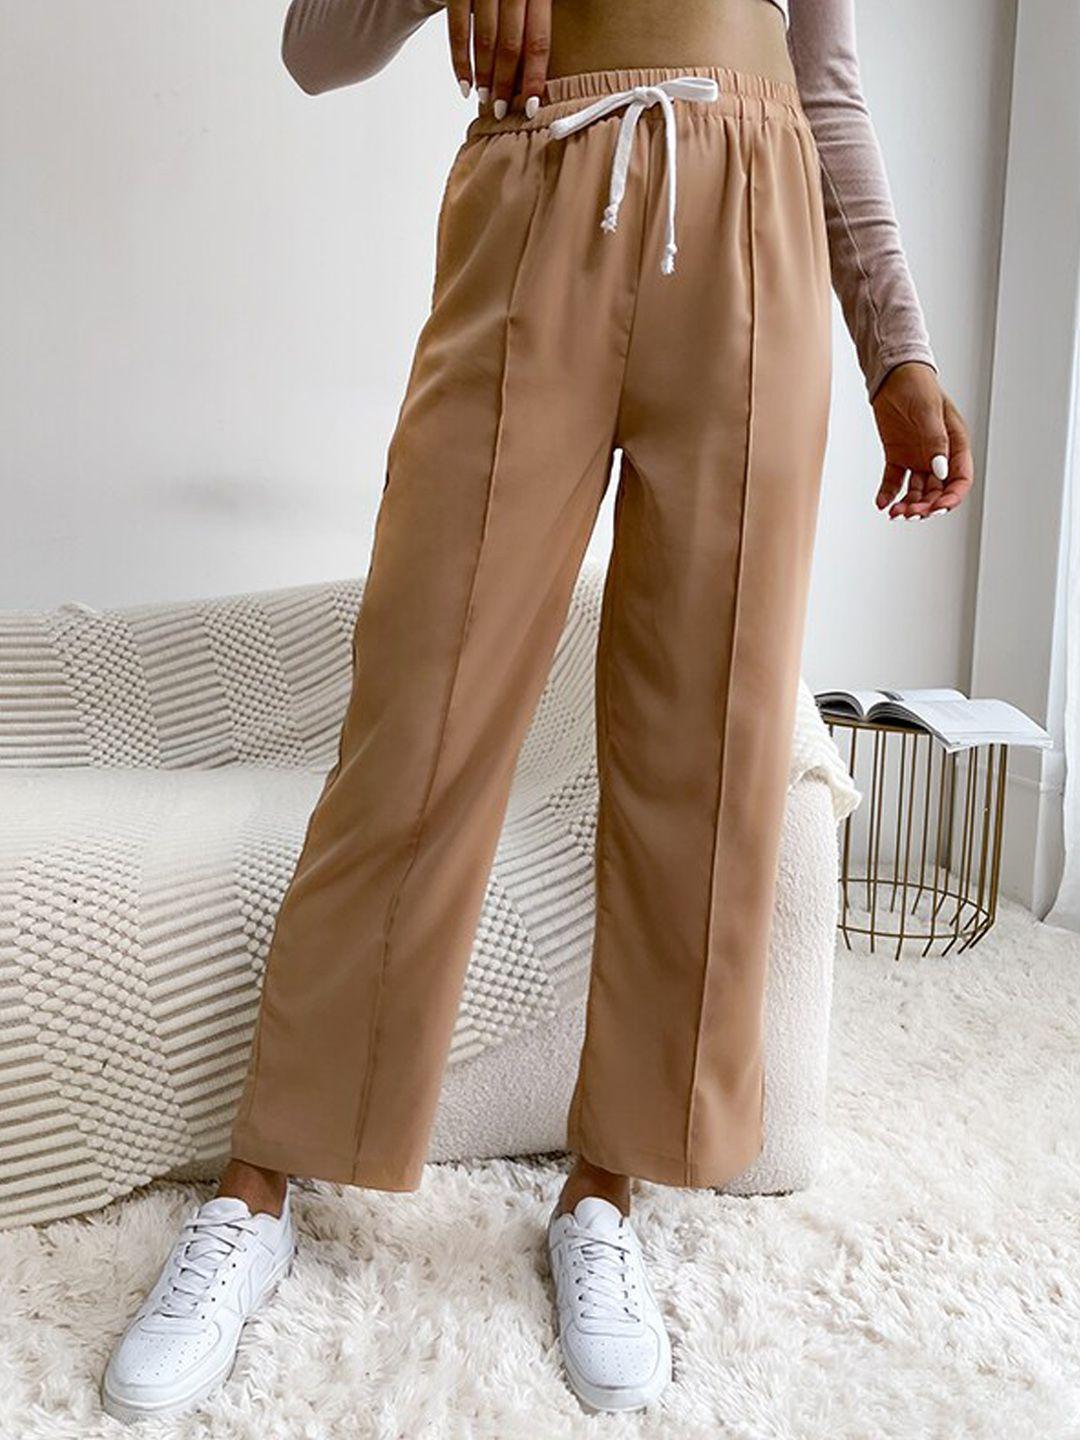 stylecast-women-khaki-high-rise-trousers